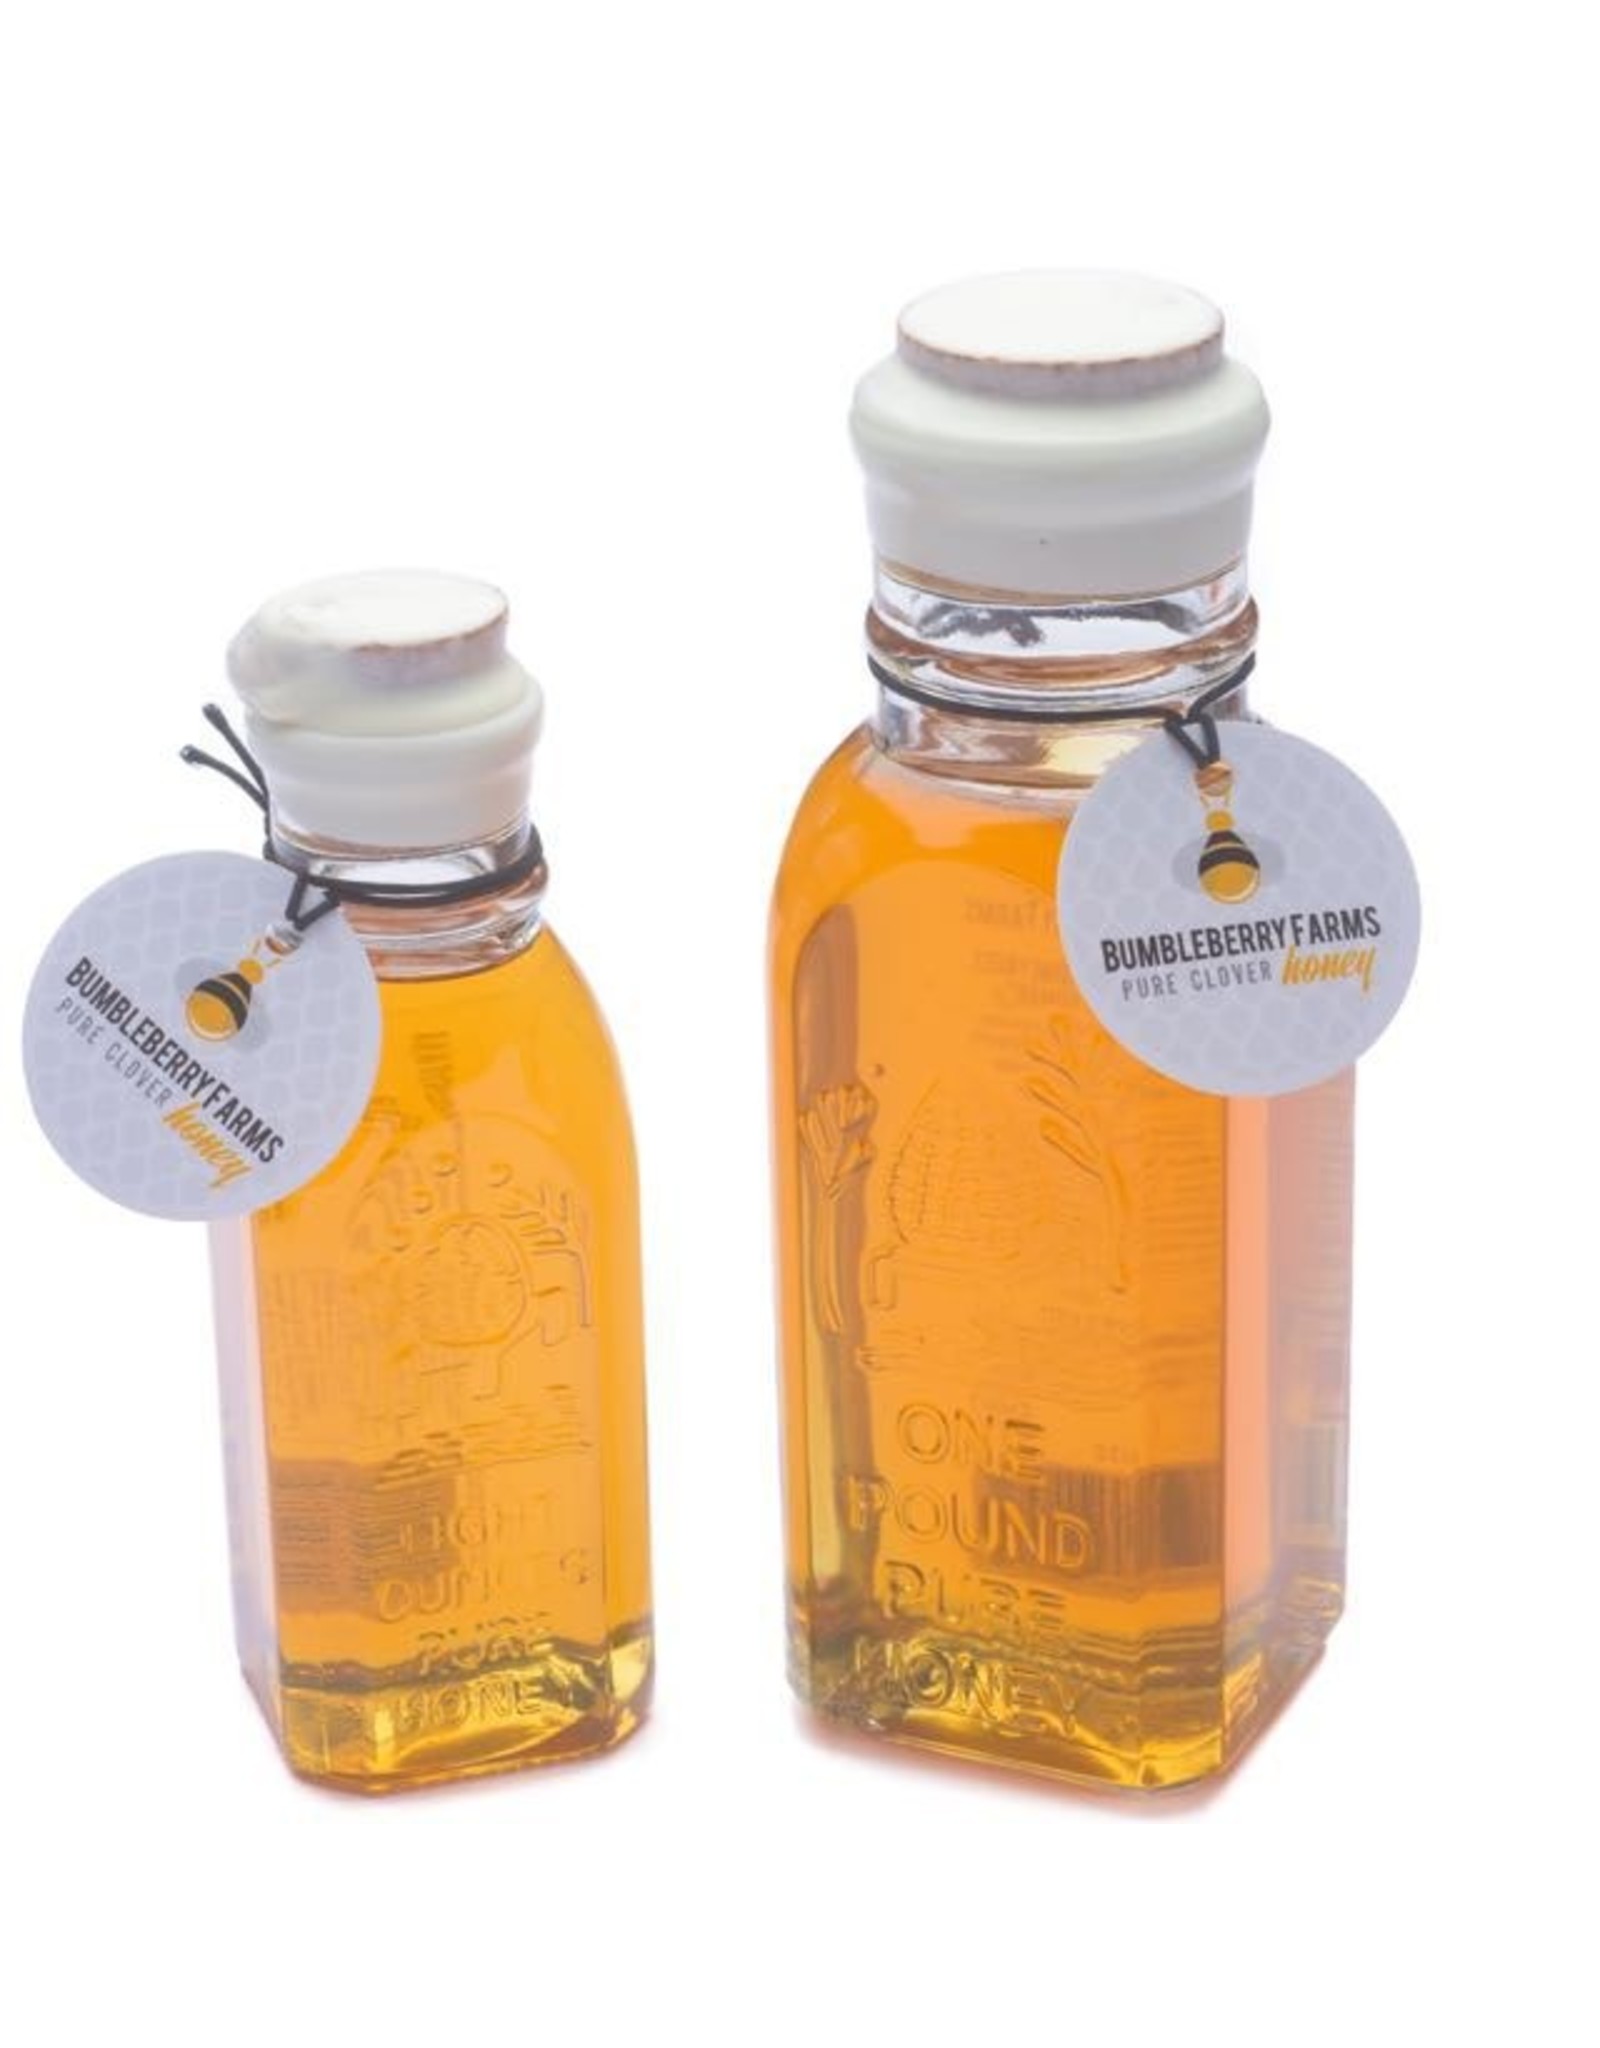 8 oz Pure Clover Honey in Embossed Jar